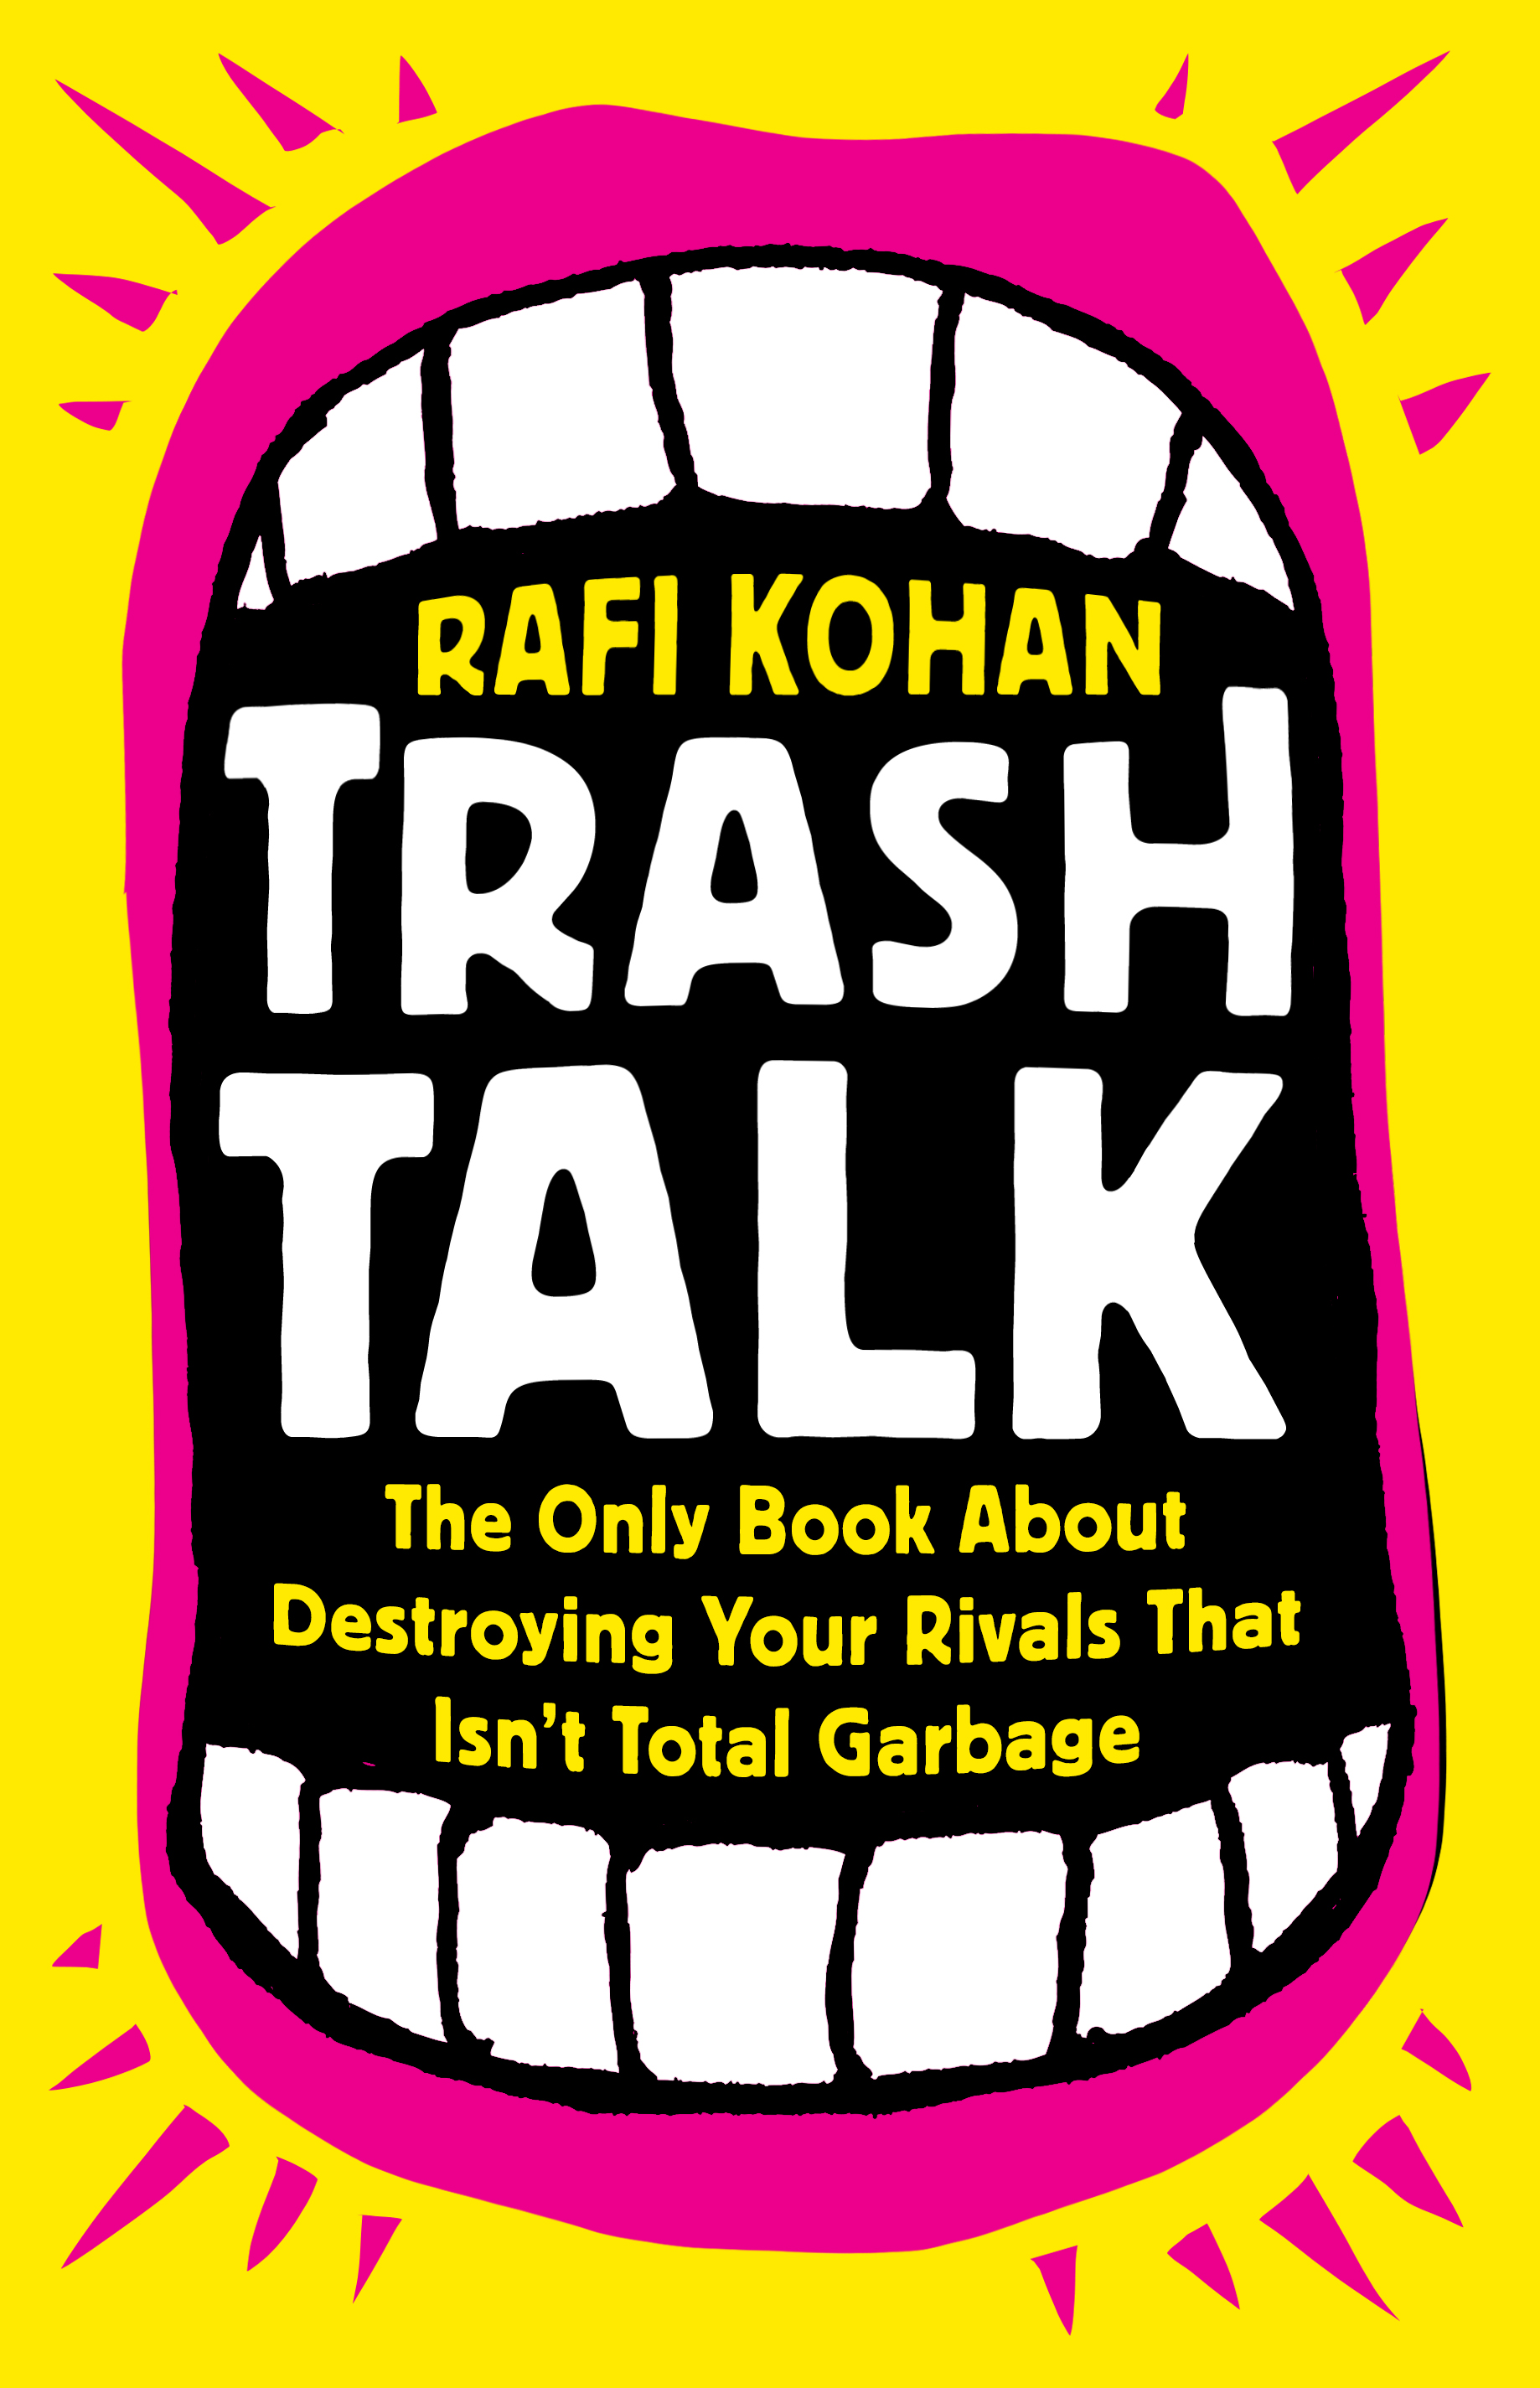 All NBA Trash Talk Team – The Evolution of Trash Talk